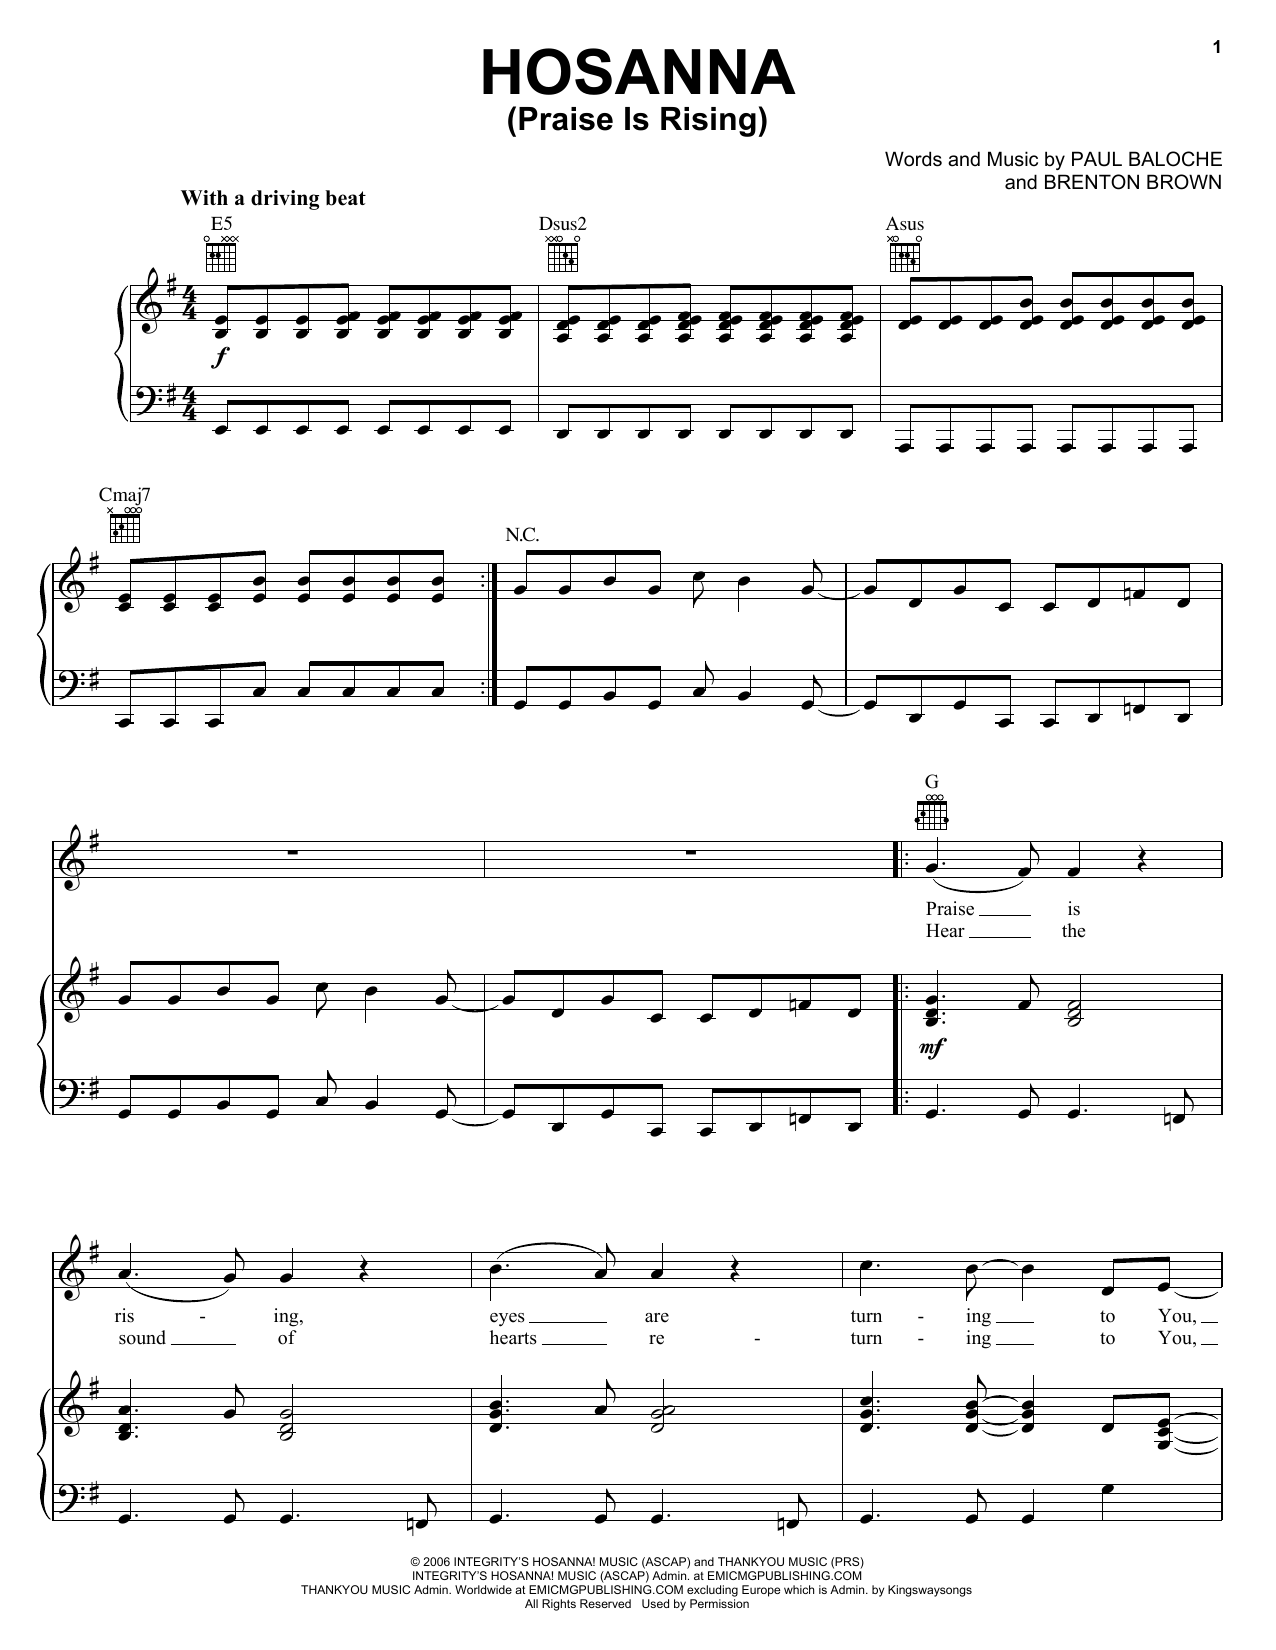 Paul Baloche Hosanna (Praise Is Rising) Sheet Music Notes & Chords for Easy Guitar - Download or Print PDF